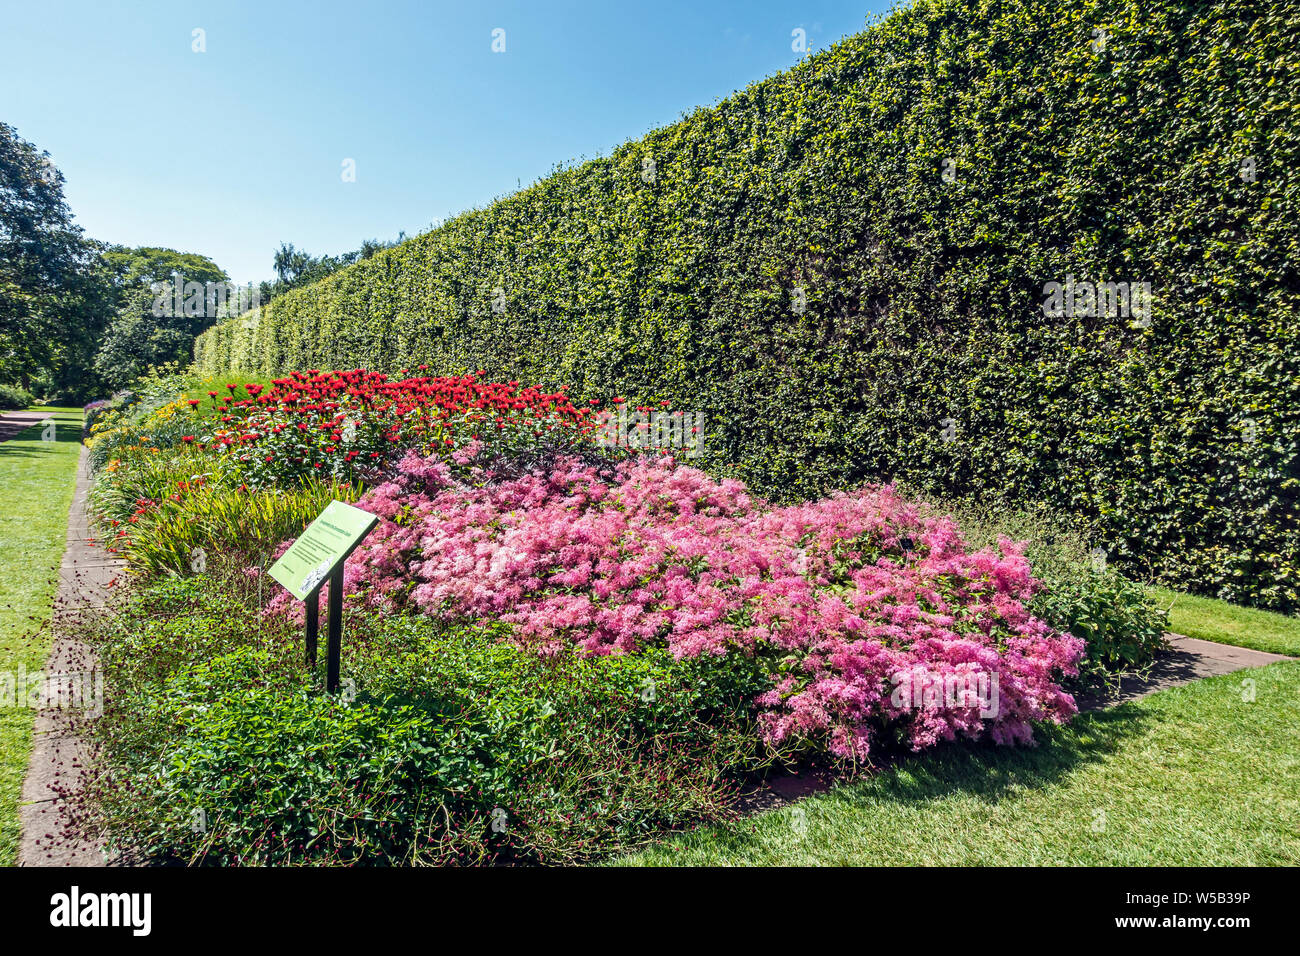 8 meters high beech hedge in the Royal Botanic Garden Inverleith Row Edinburgh Scotland UK with flower beds Stock Photo